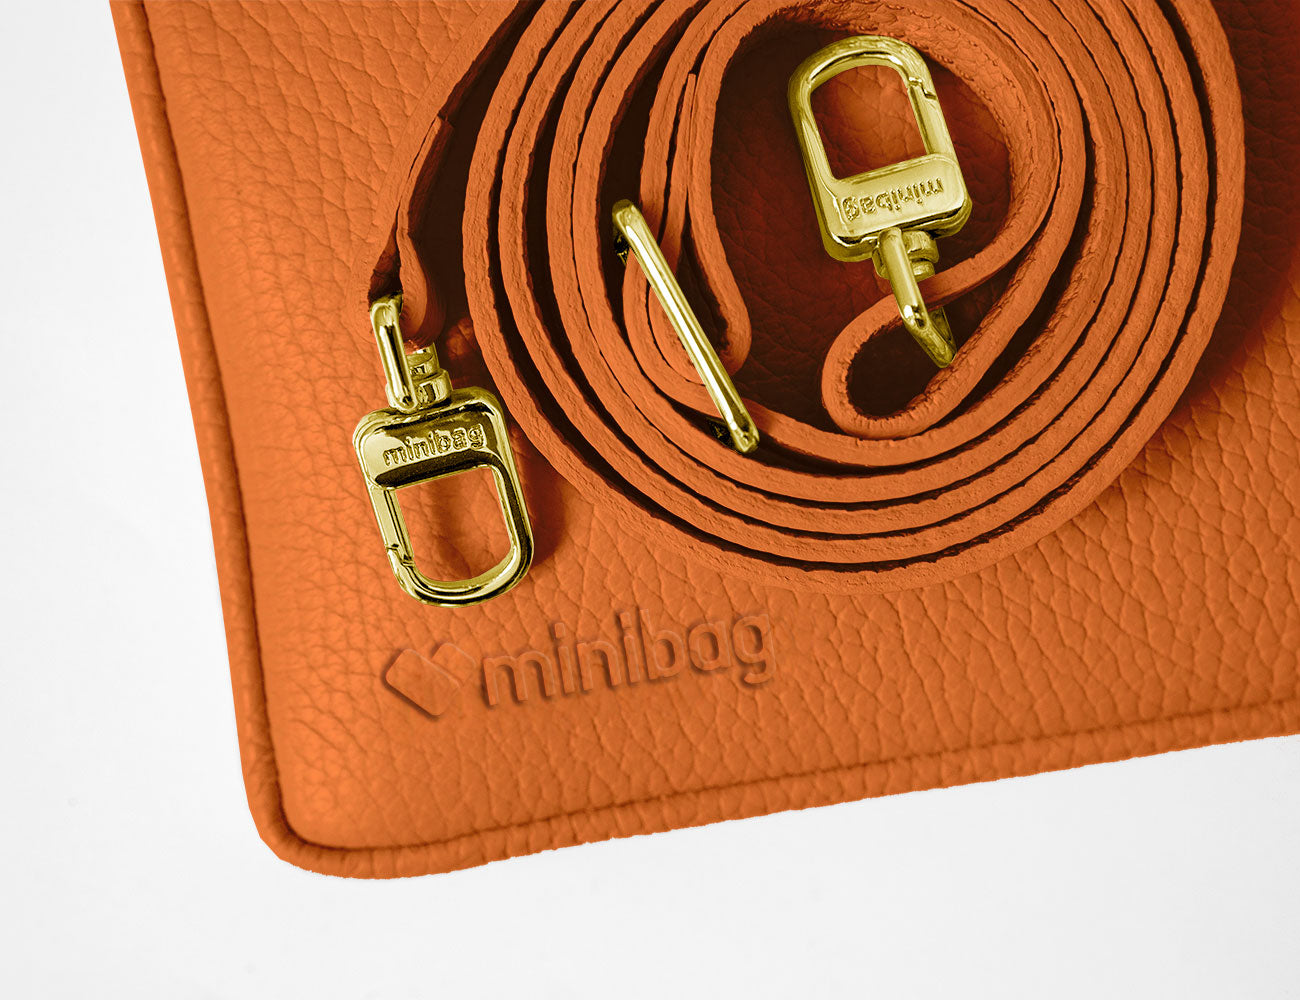 minibag orange Edition GOLD, Ledertasche orange, Clutch orange, Details minibag, Ledergurt orange